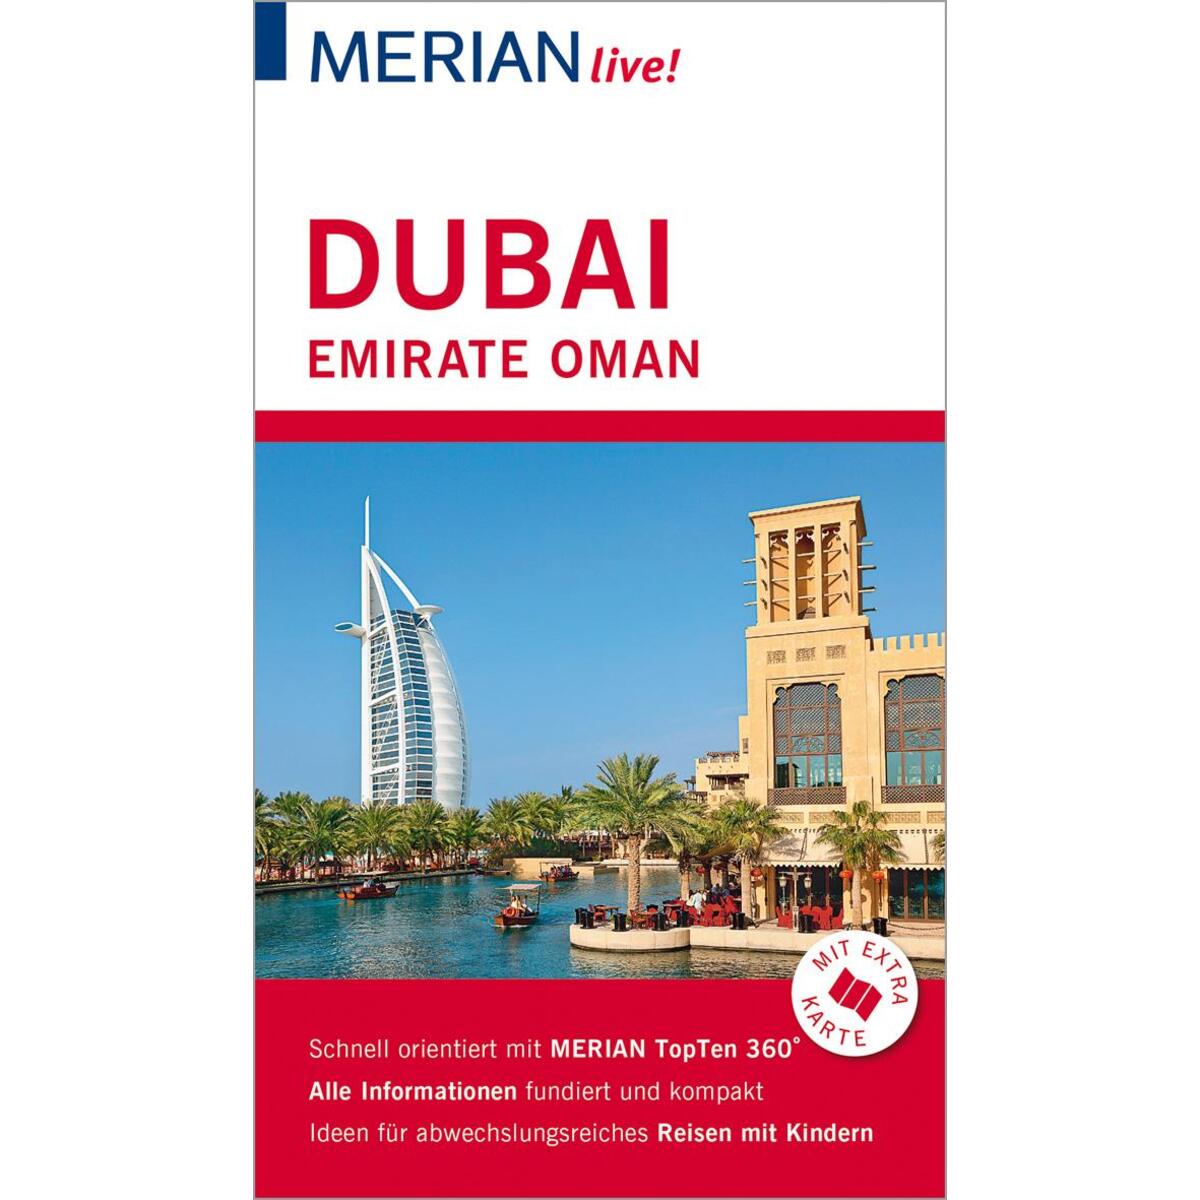 MERIAN live! Reiseführer Dubai, Emirate, Oman von Travel House Media GmbH